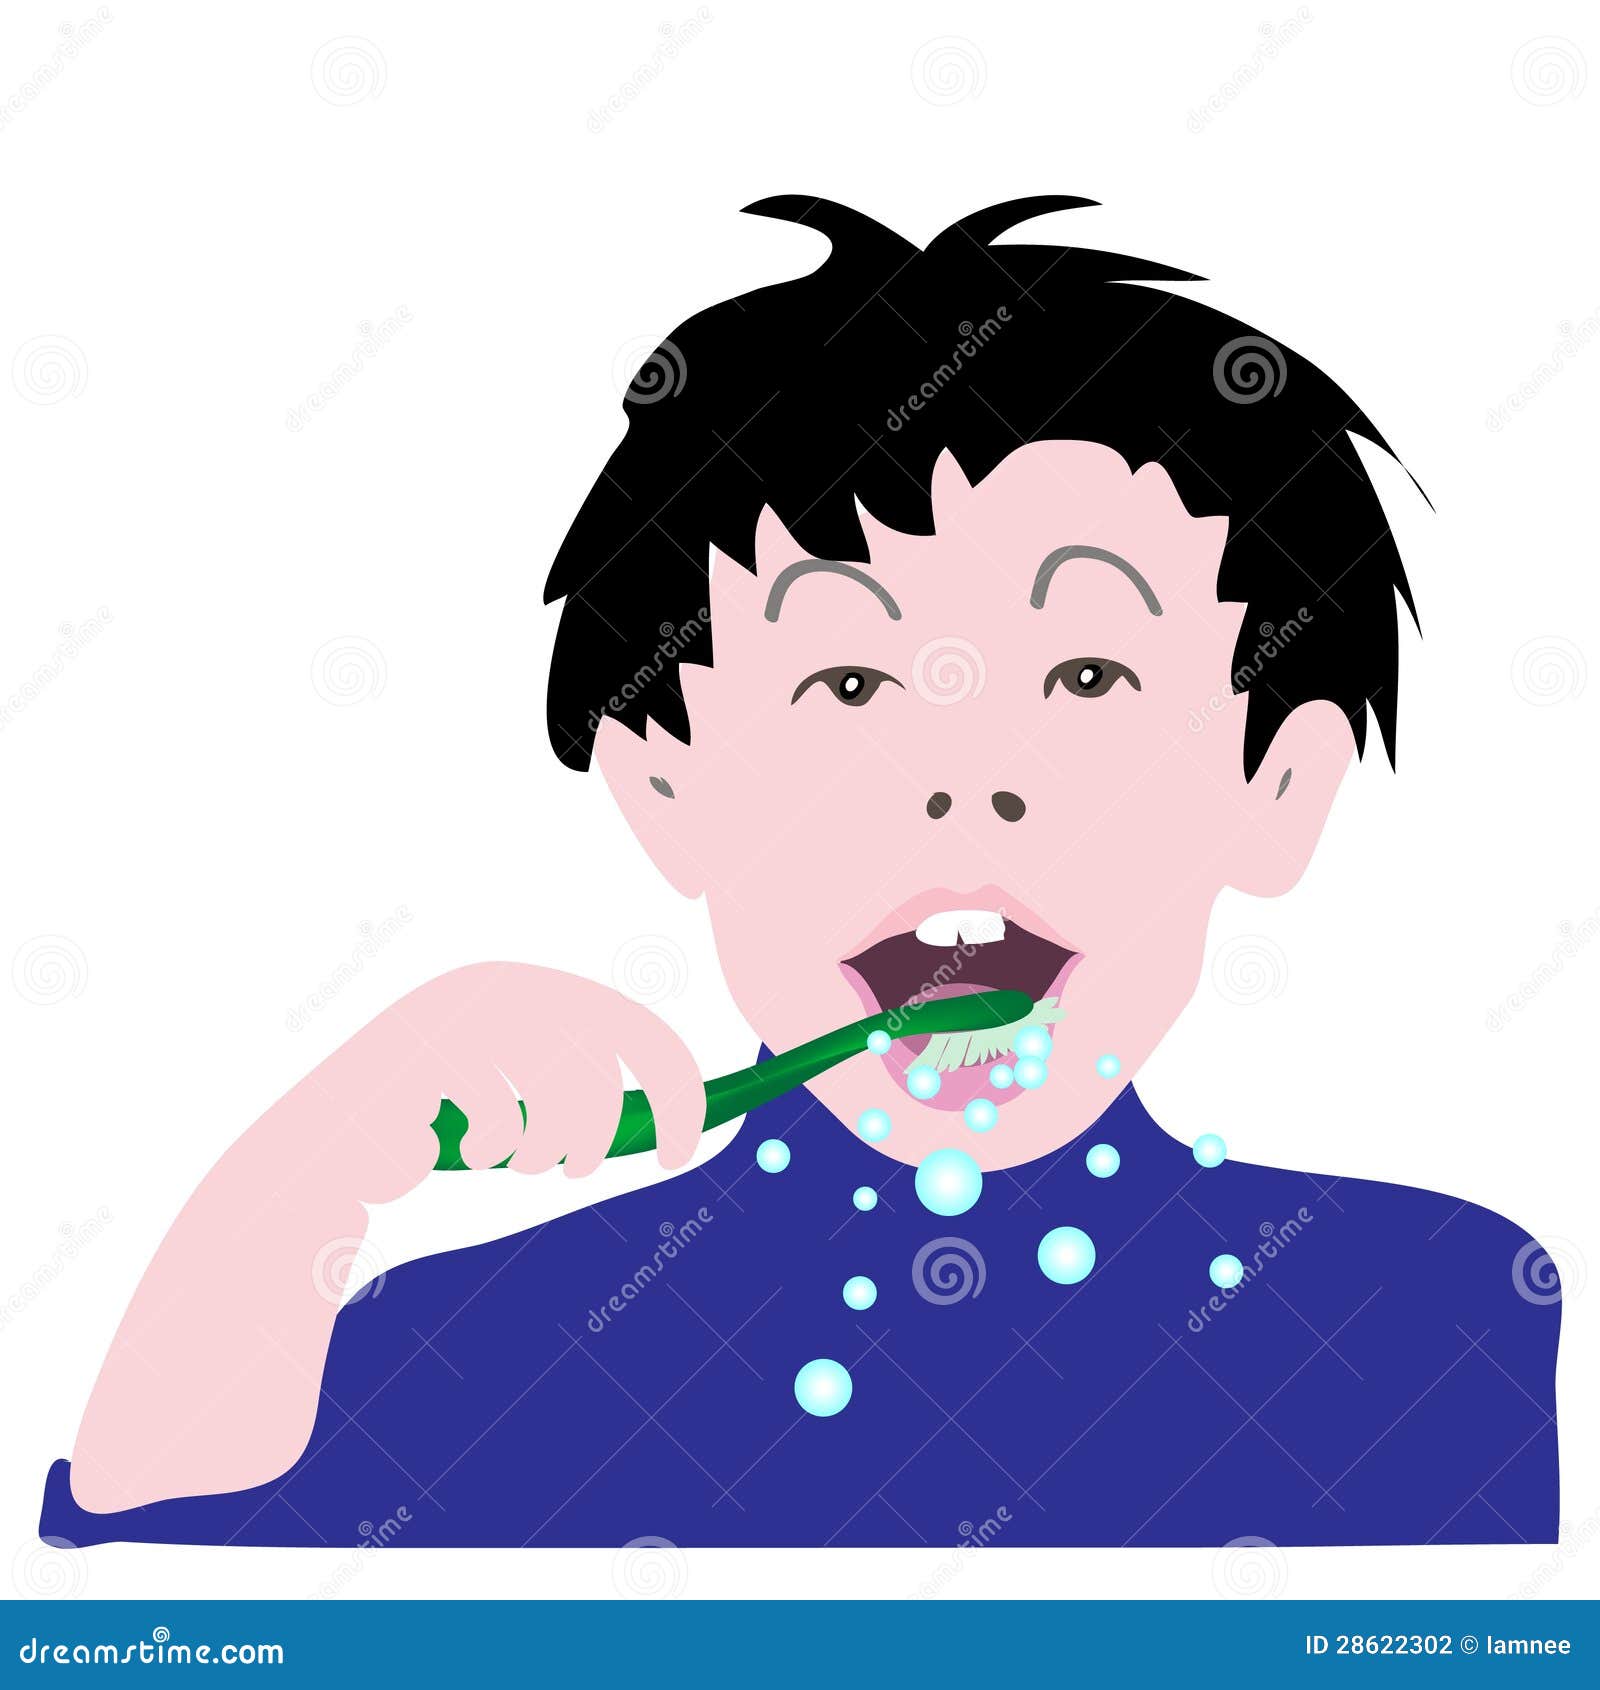 clipart boy brushing teeth - photo #48